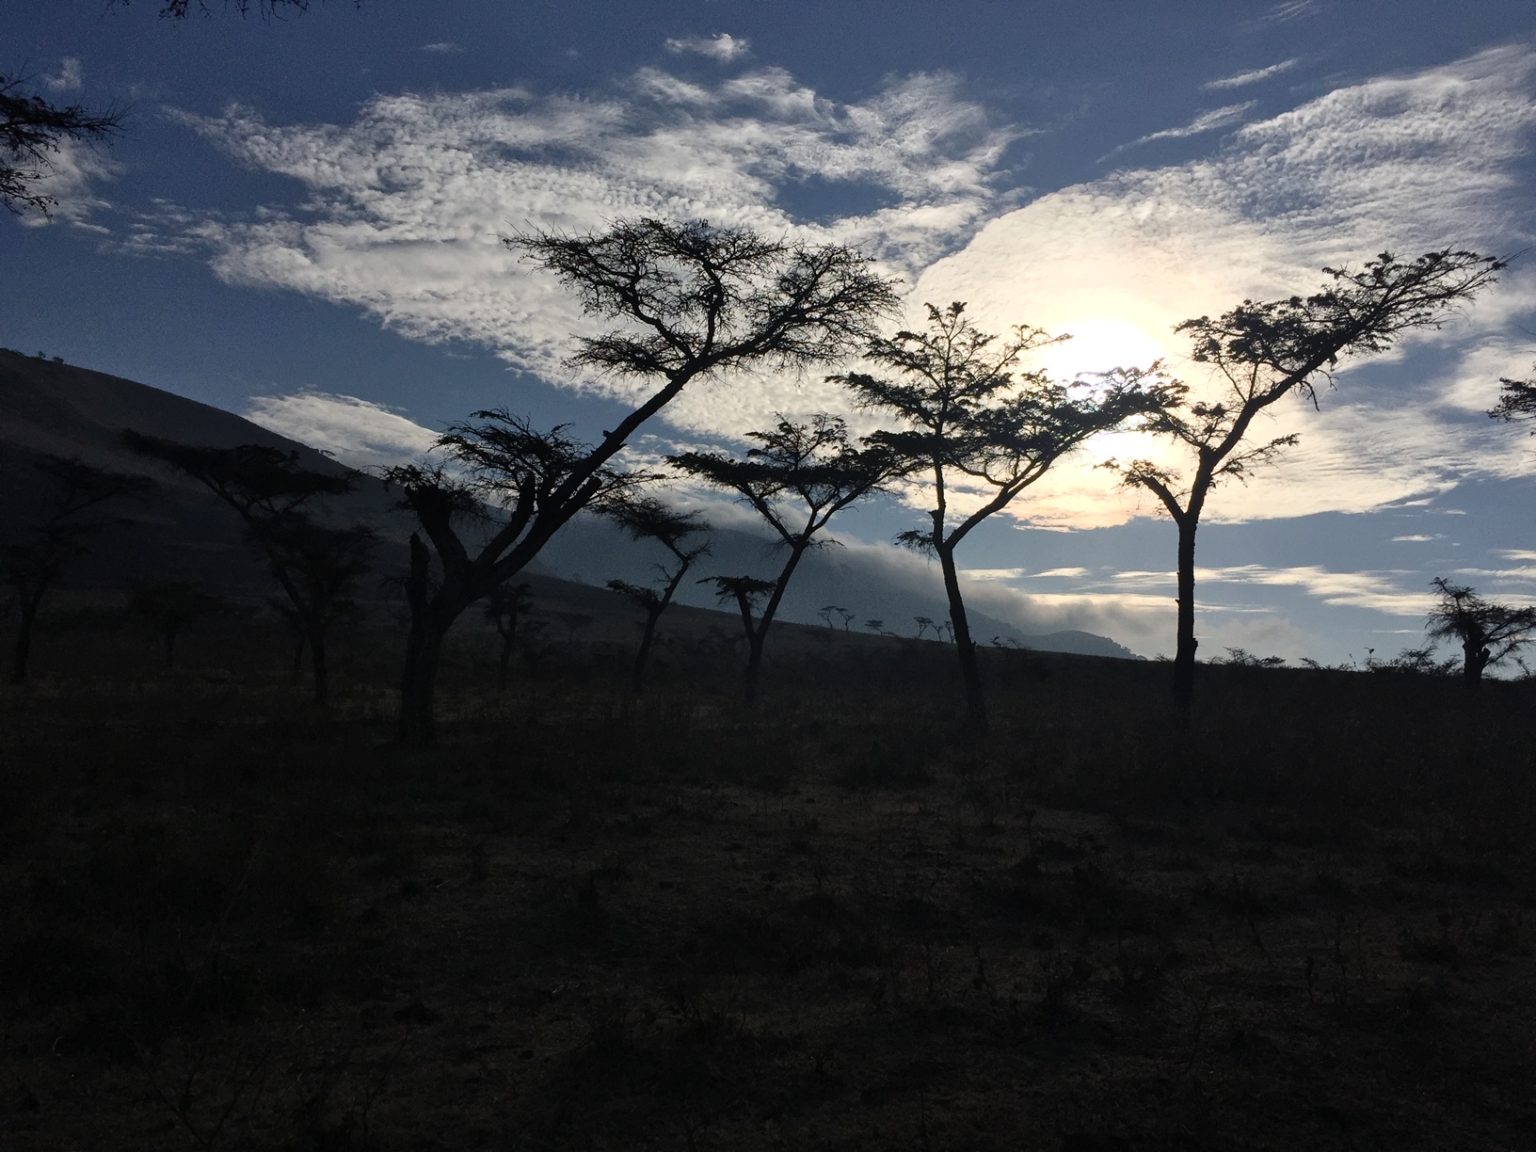 The beautiful Serengeti landscape at dusk